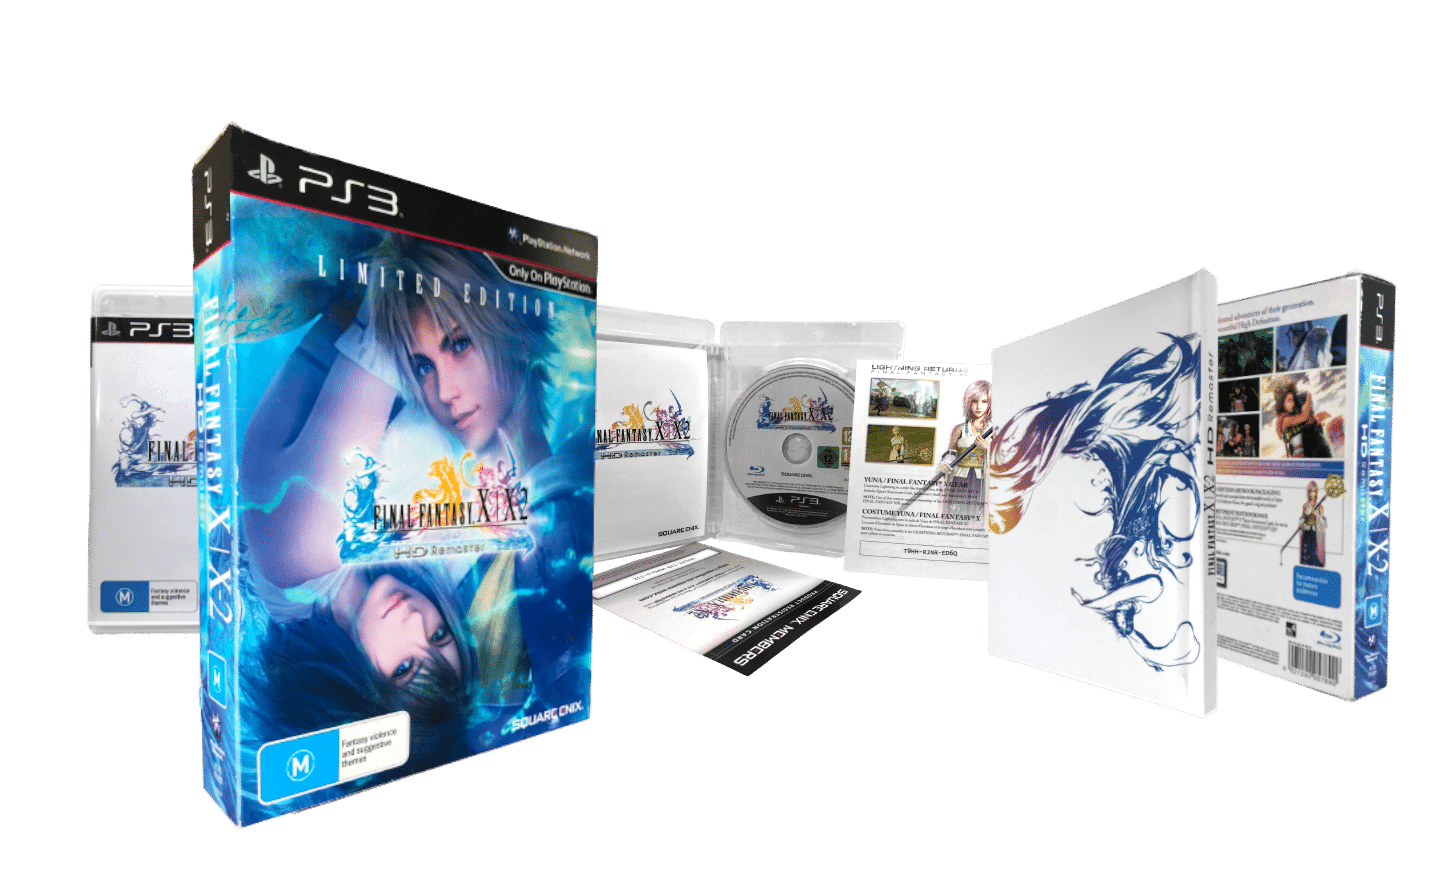 Final Fantasy X / X-2 HD Remaster Limited Edition [PlayStation 3